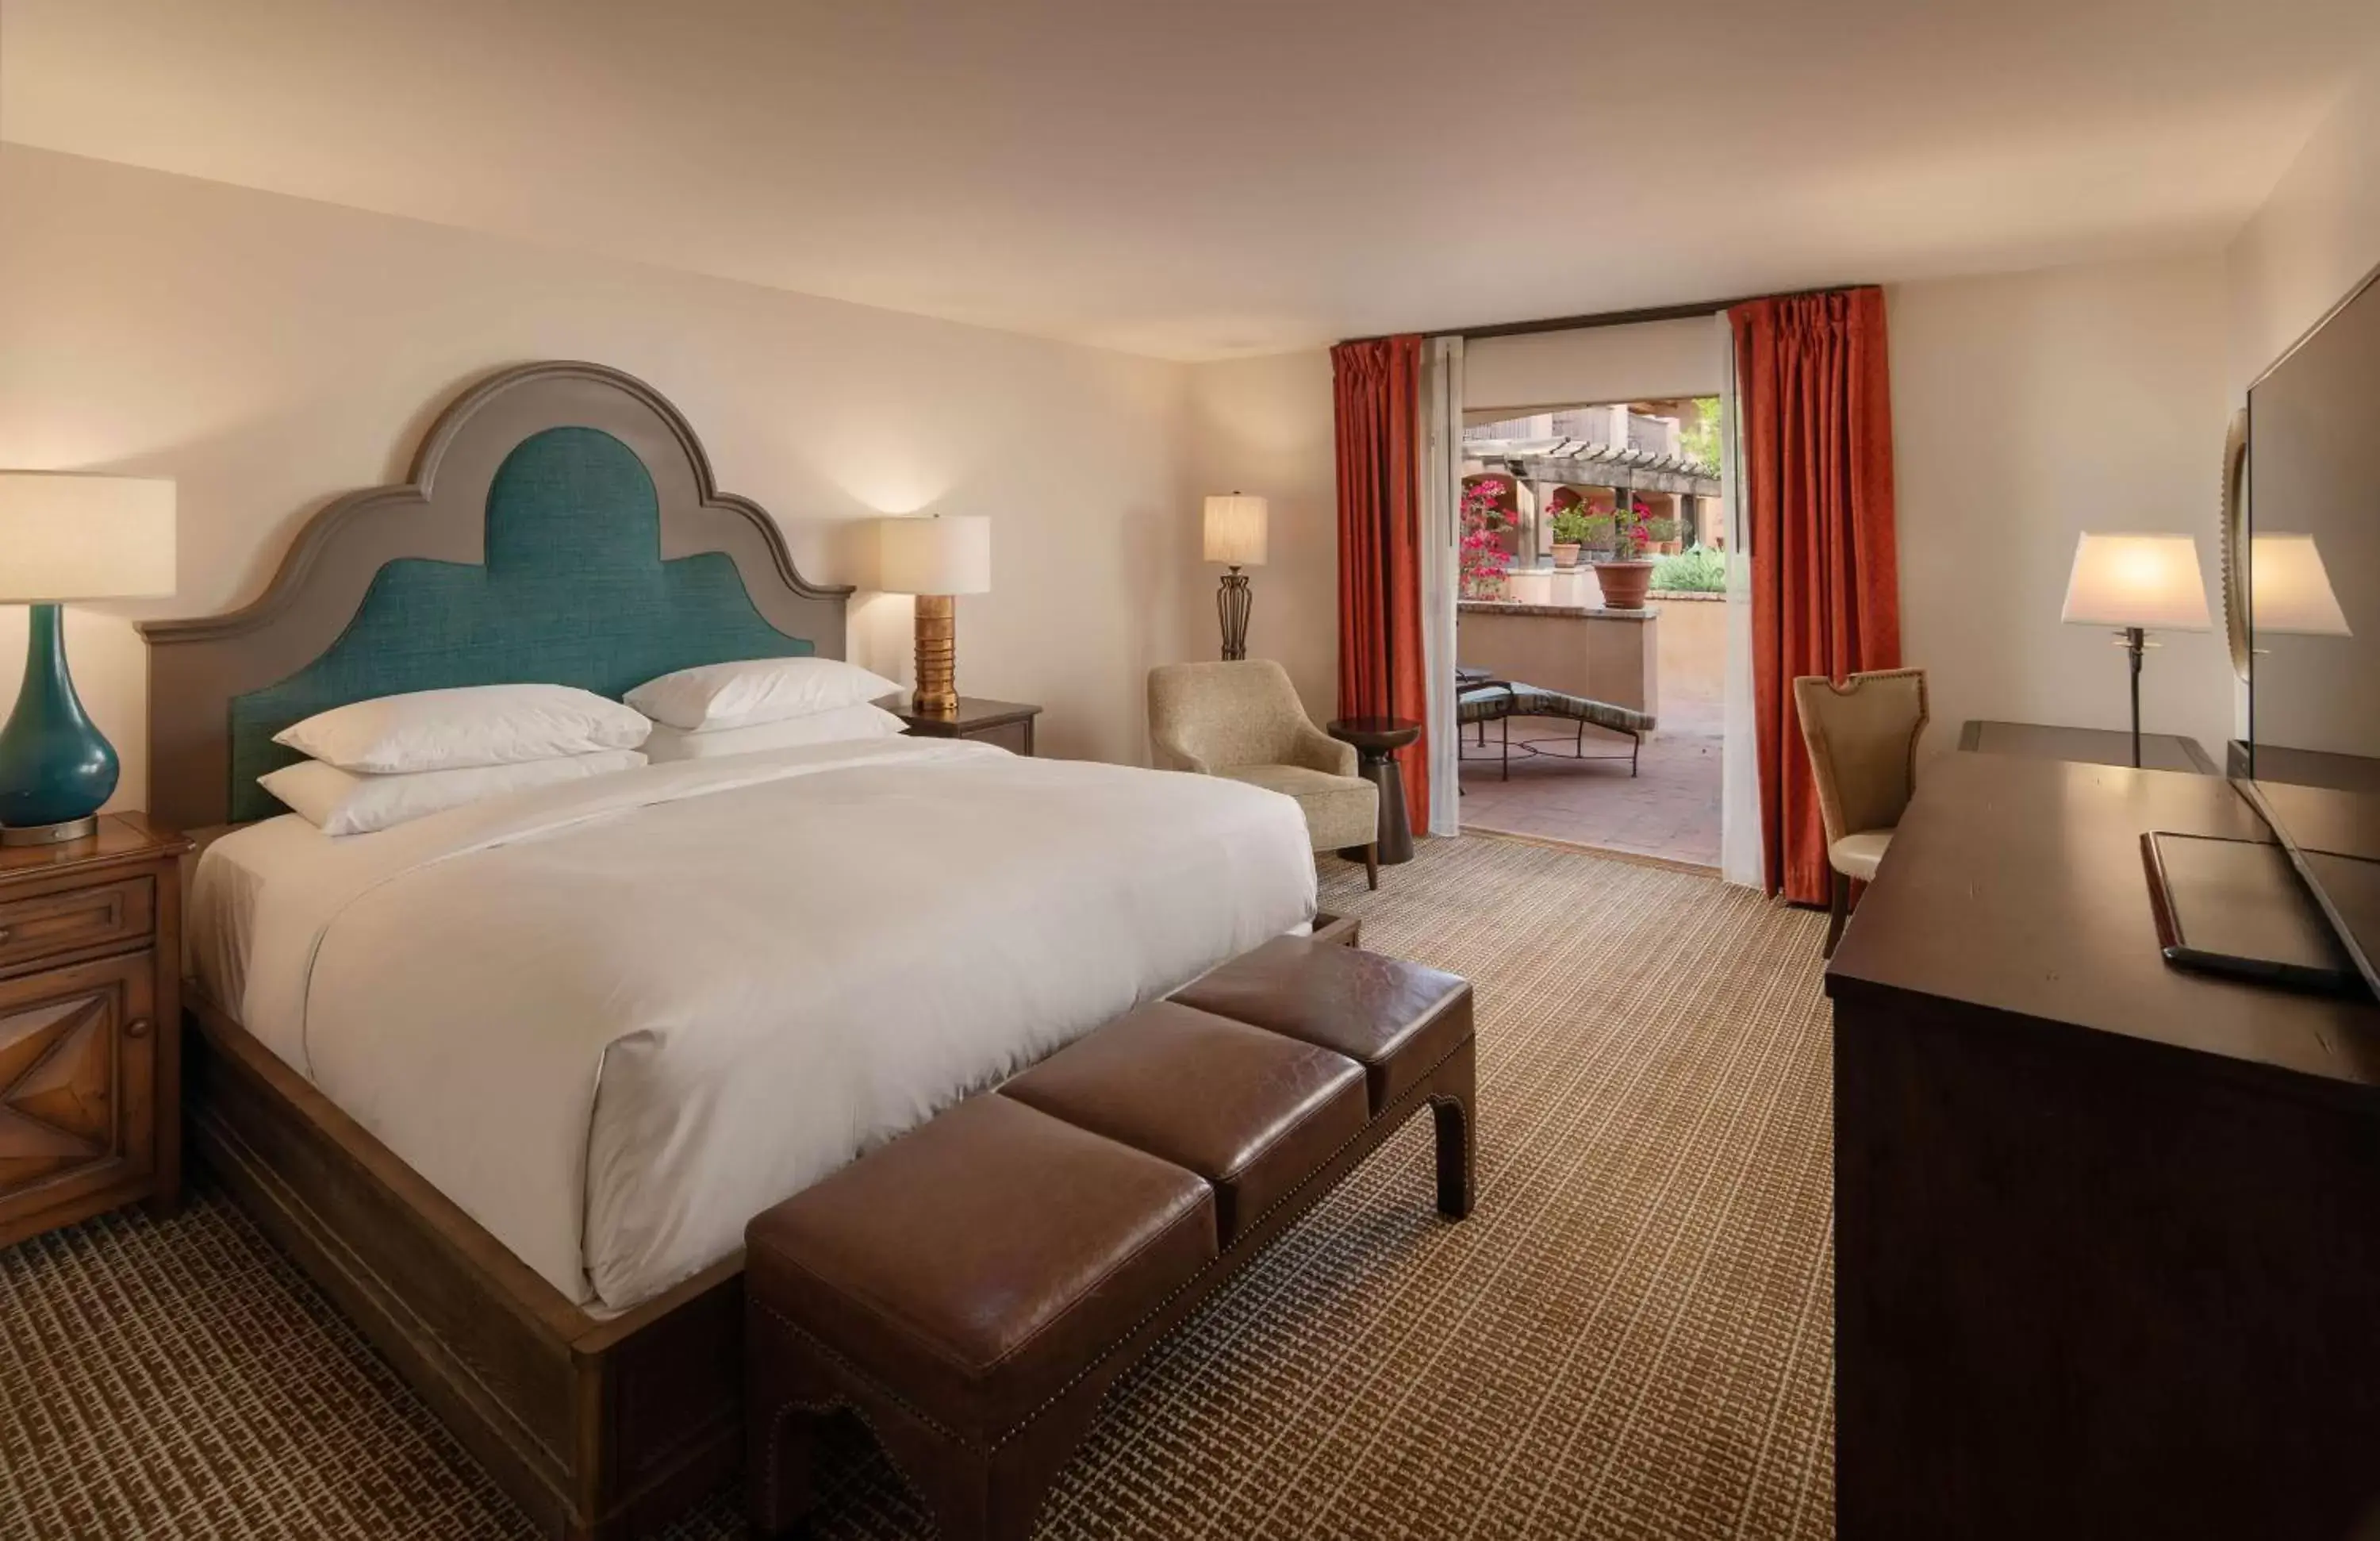 Bedroom, Bed in Royal Palms Resort and Spa, part of Hyatt